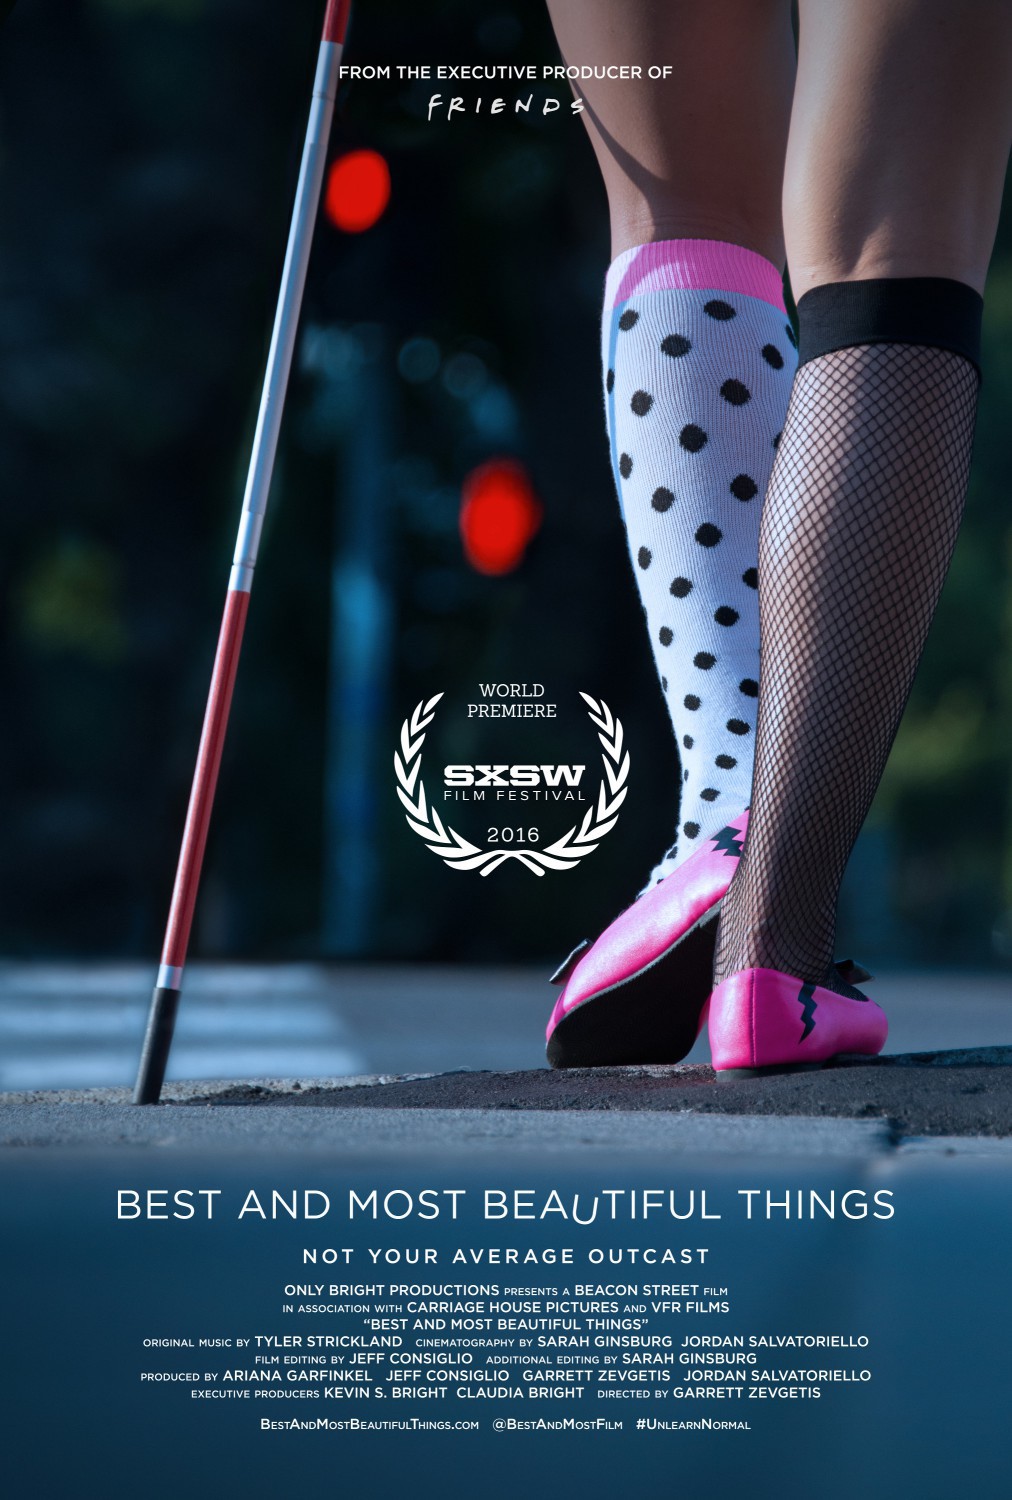 Nonton film Best and Most Beautiful Things layarkaca21 indoxx1 ganool online streaming terbaru